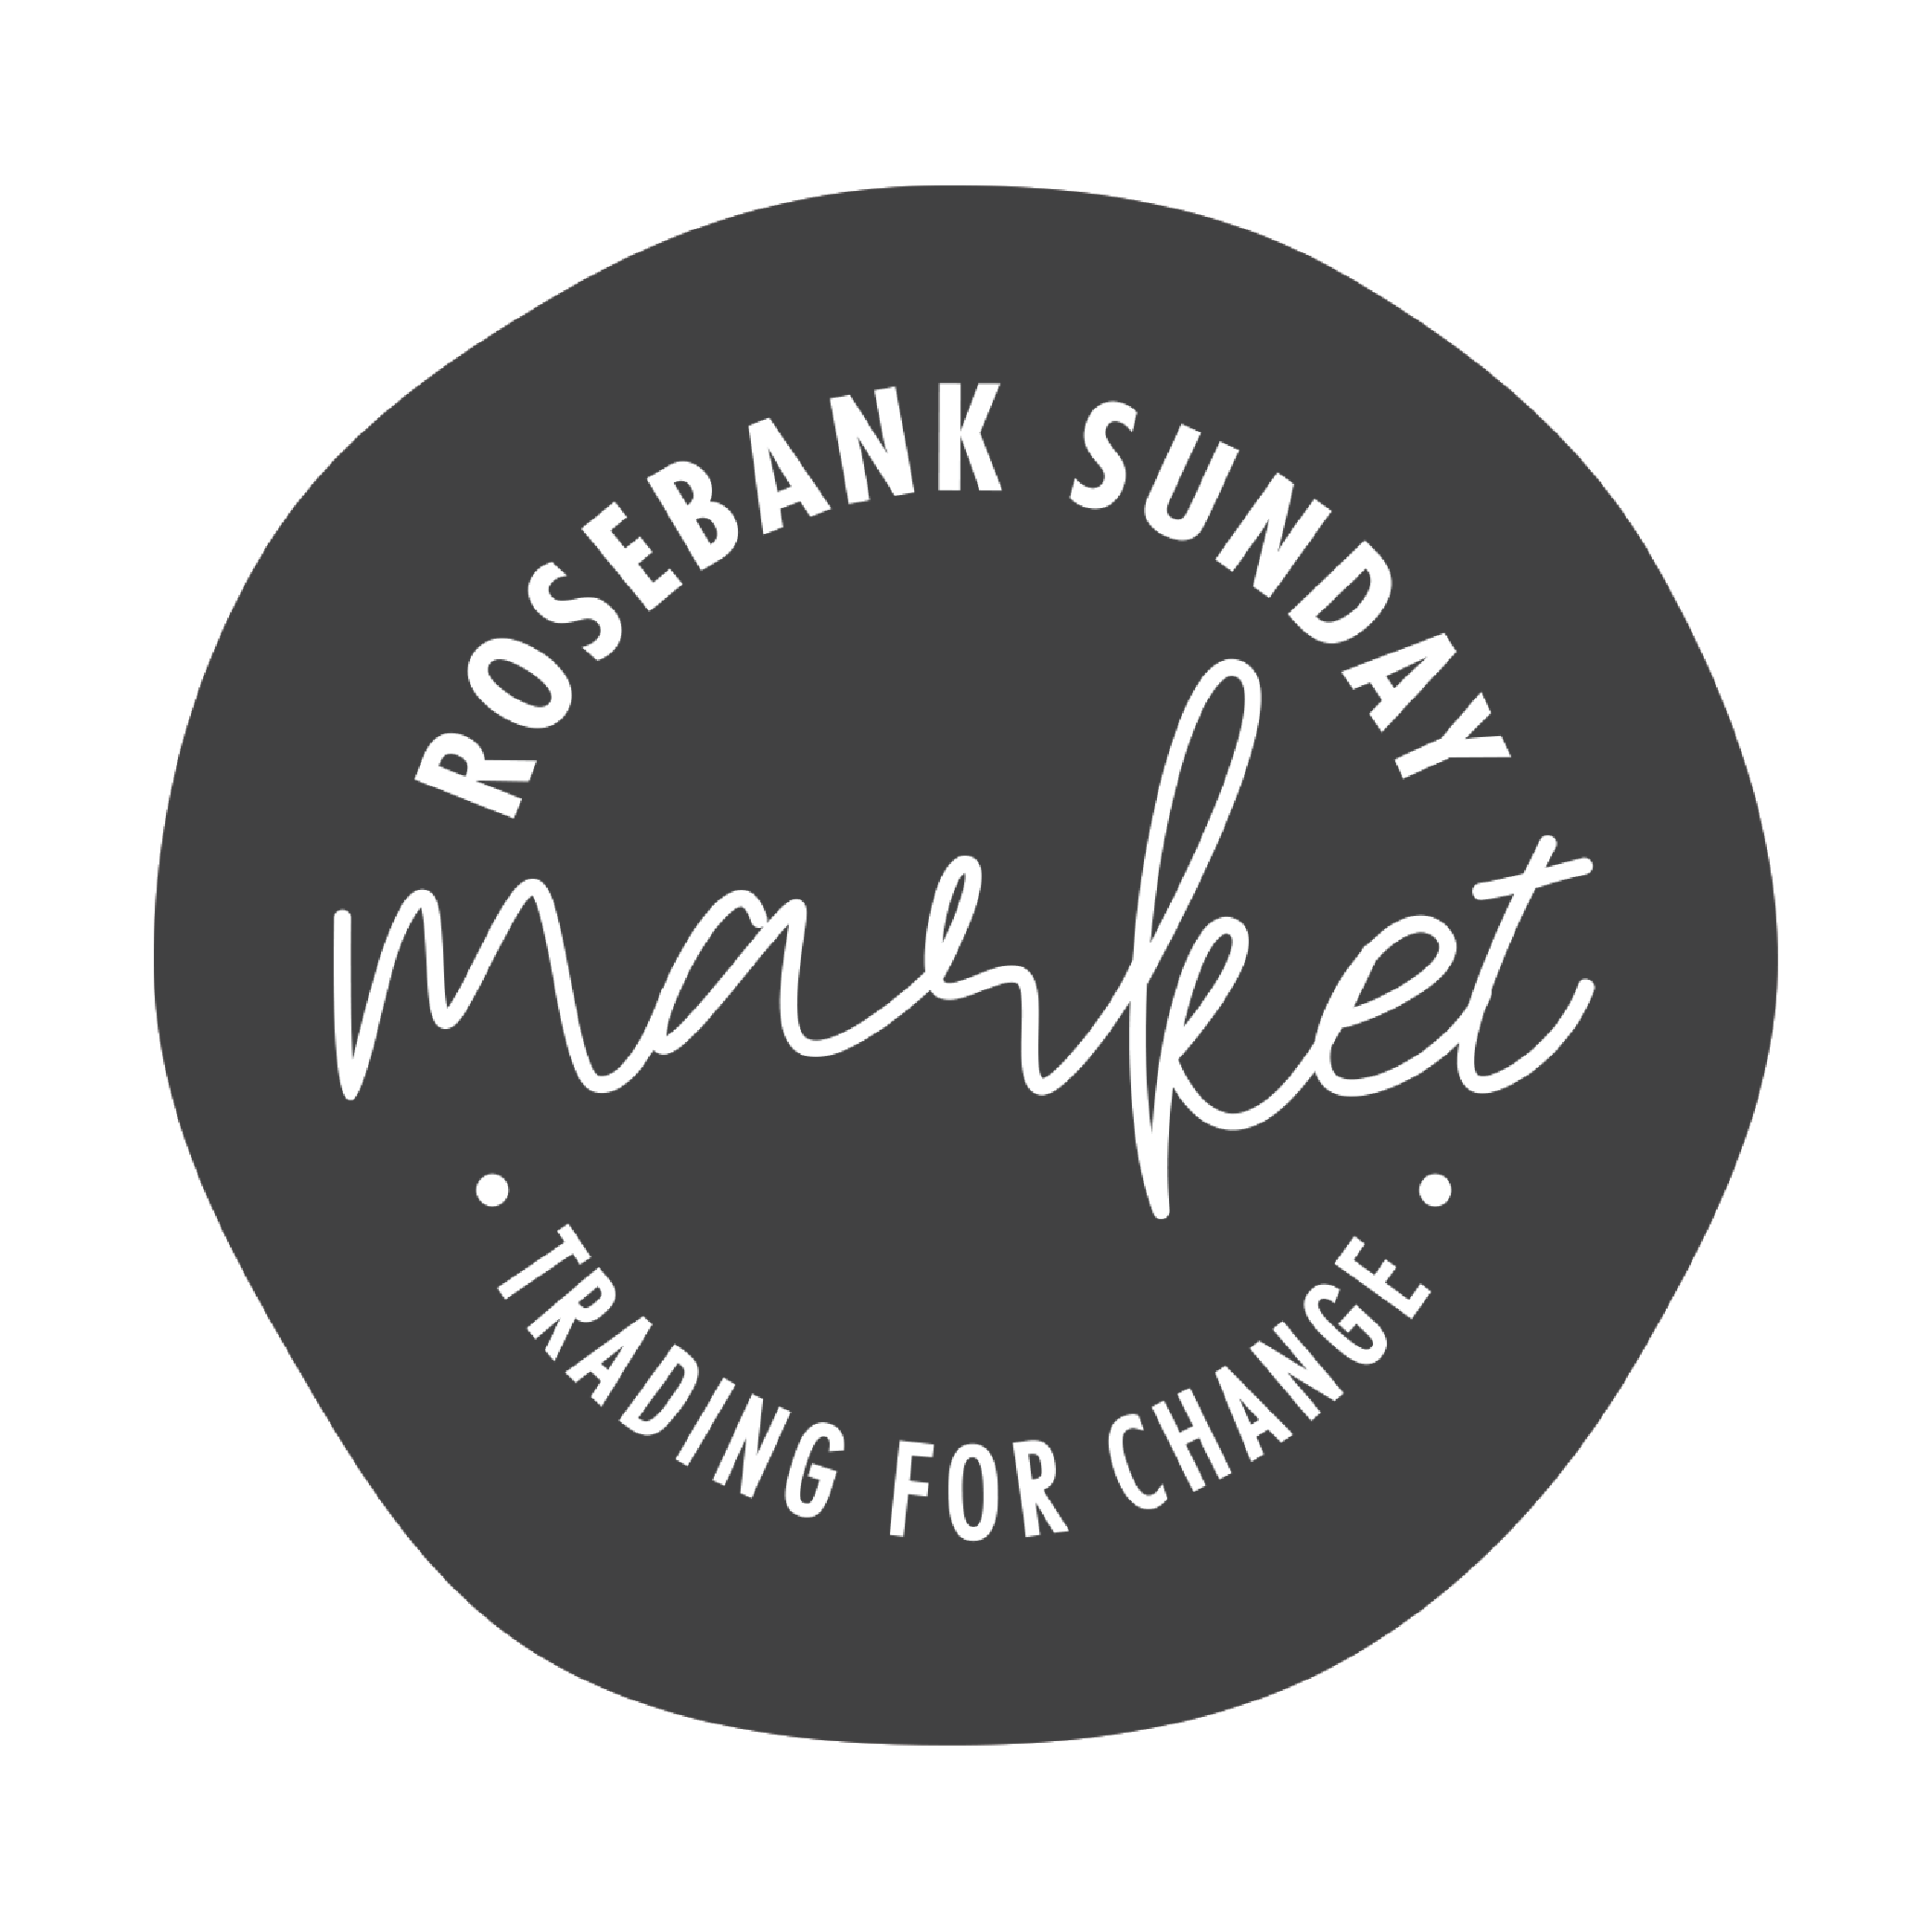 Rosebank Sunday Market